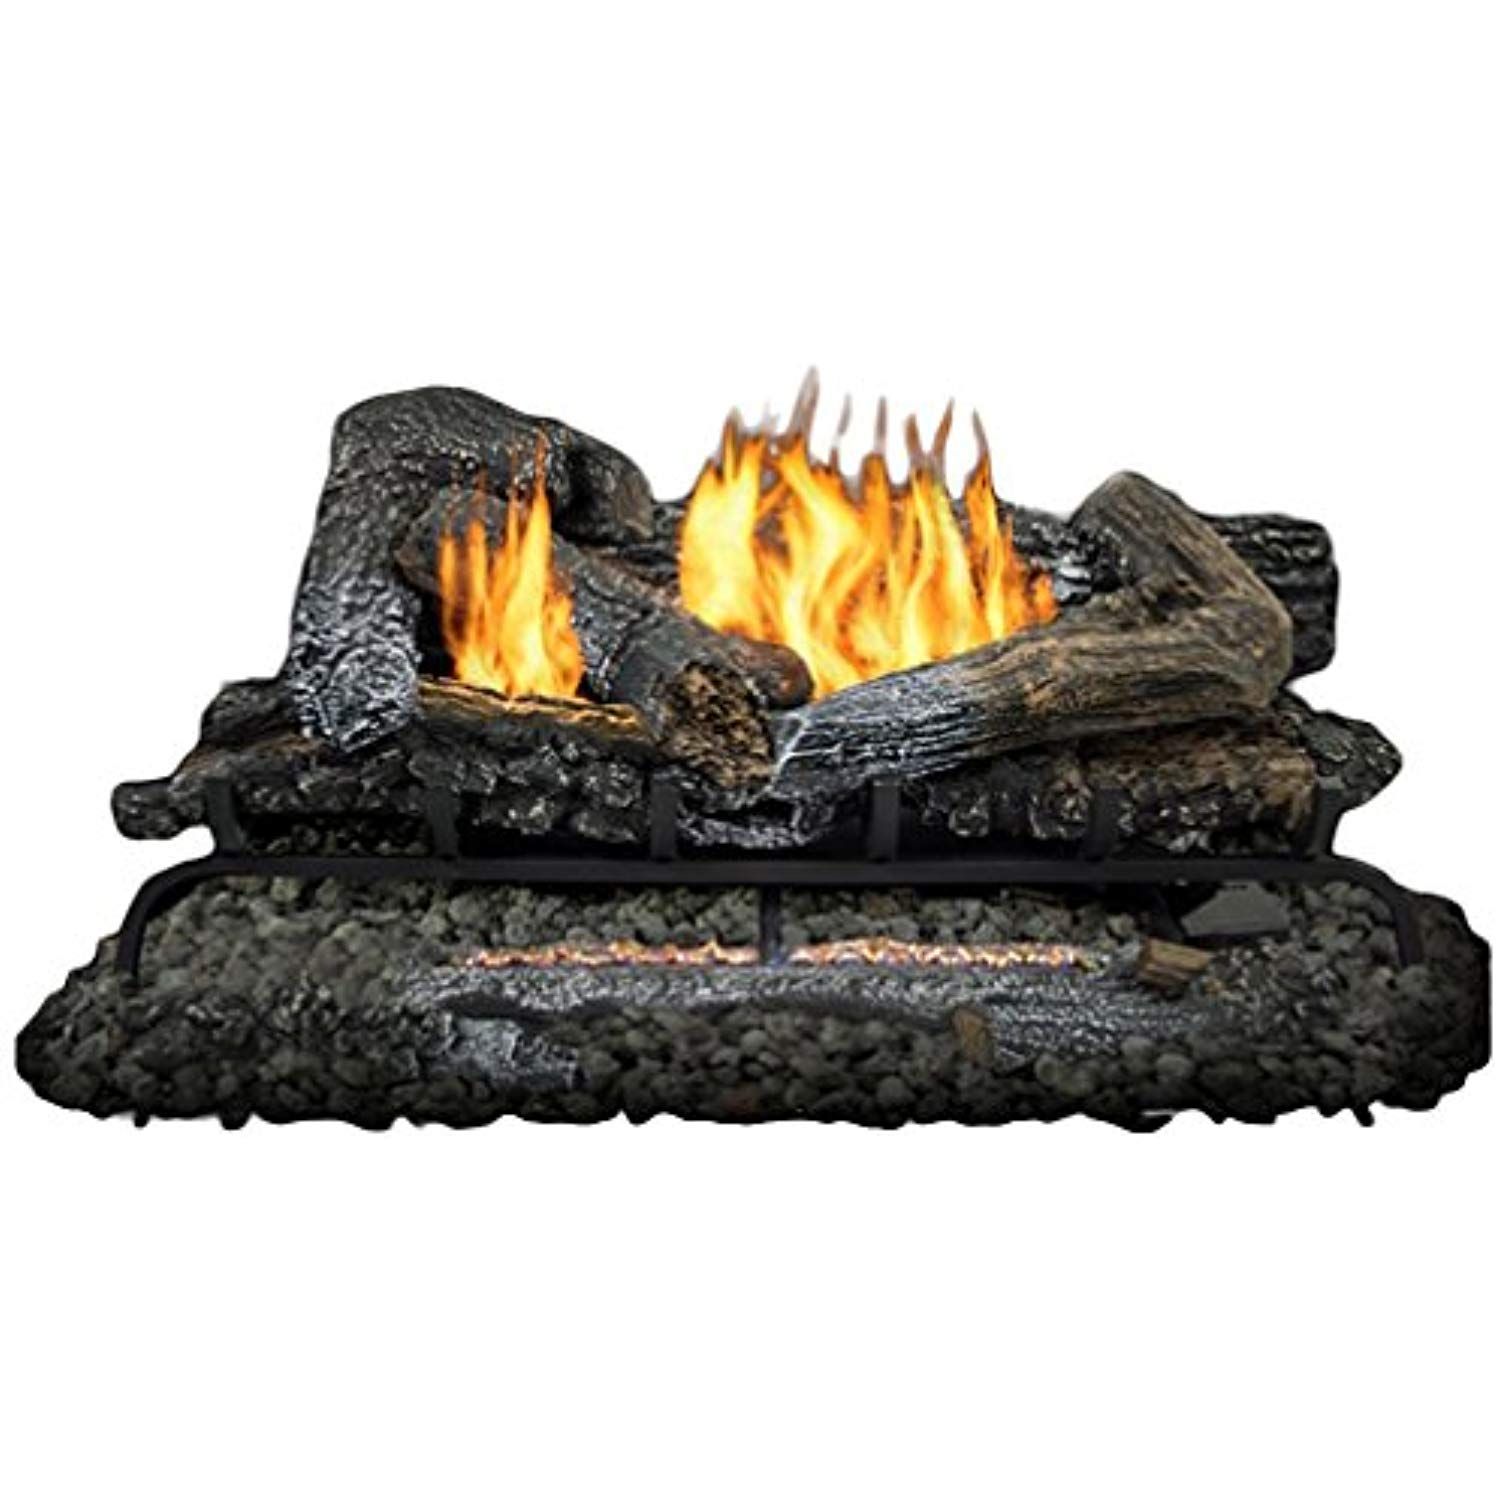 Fireplace Burner Kit Luxury Kozy World Gld3070r Vented Gas Log Set 30" Want to Know